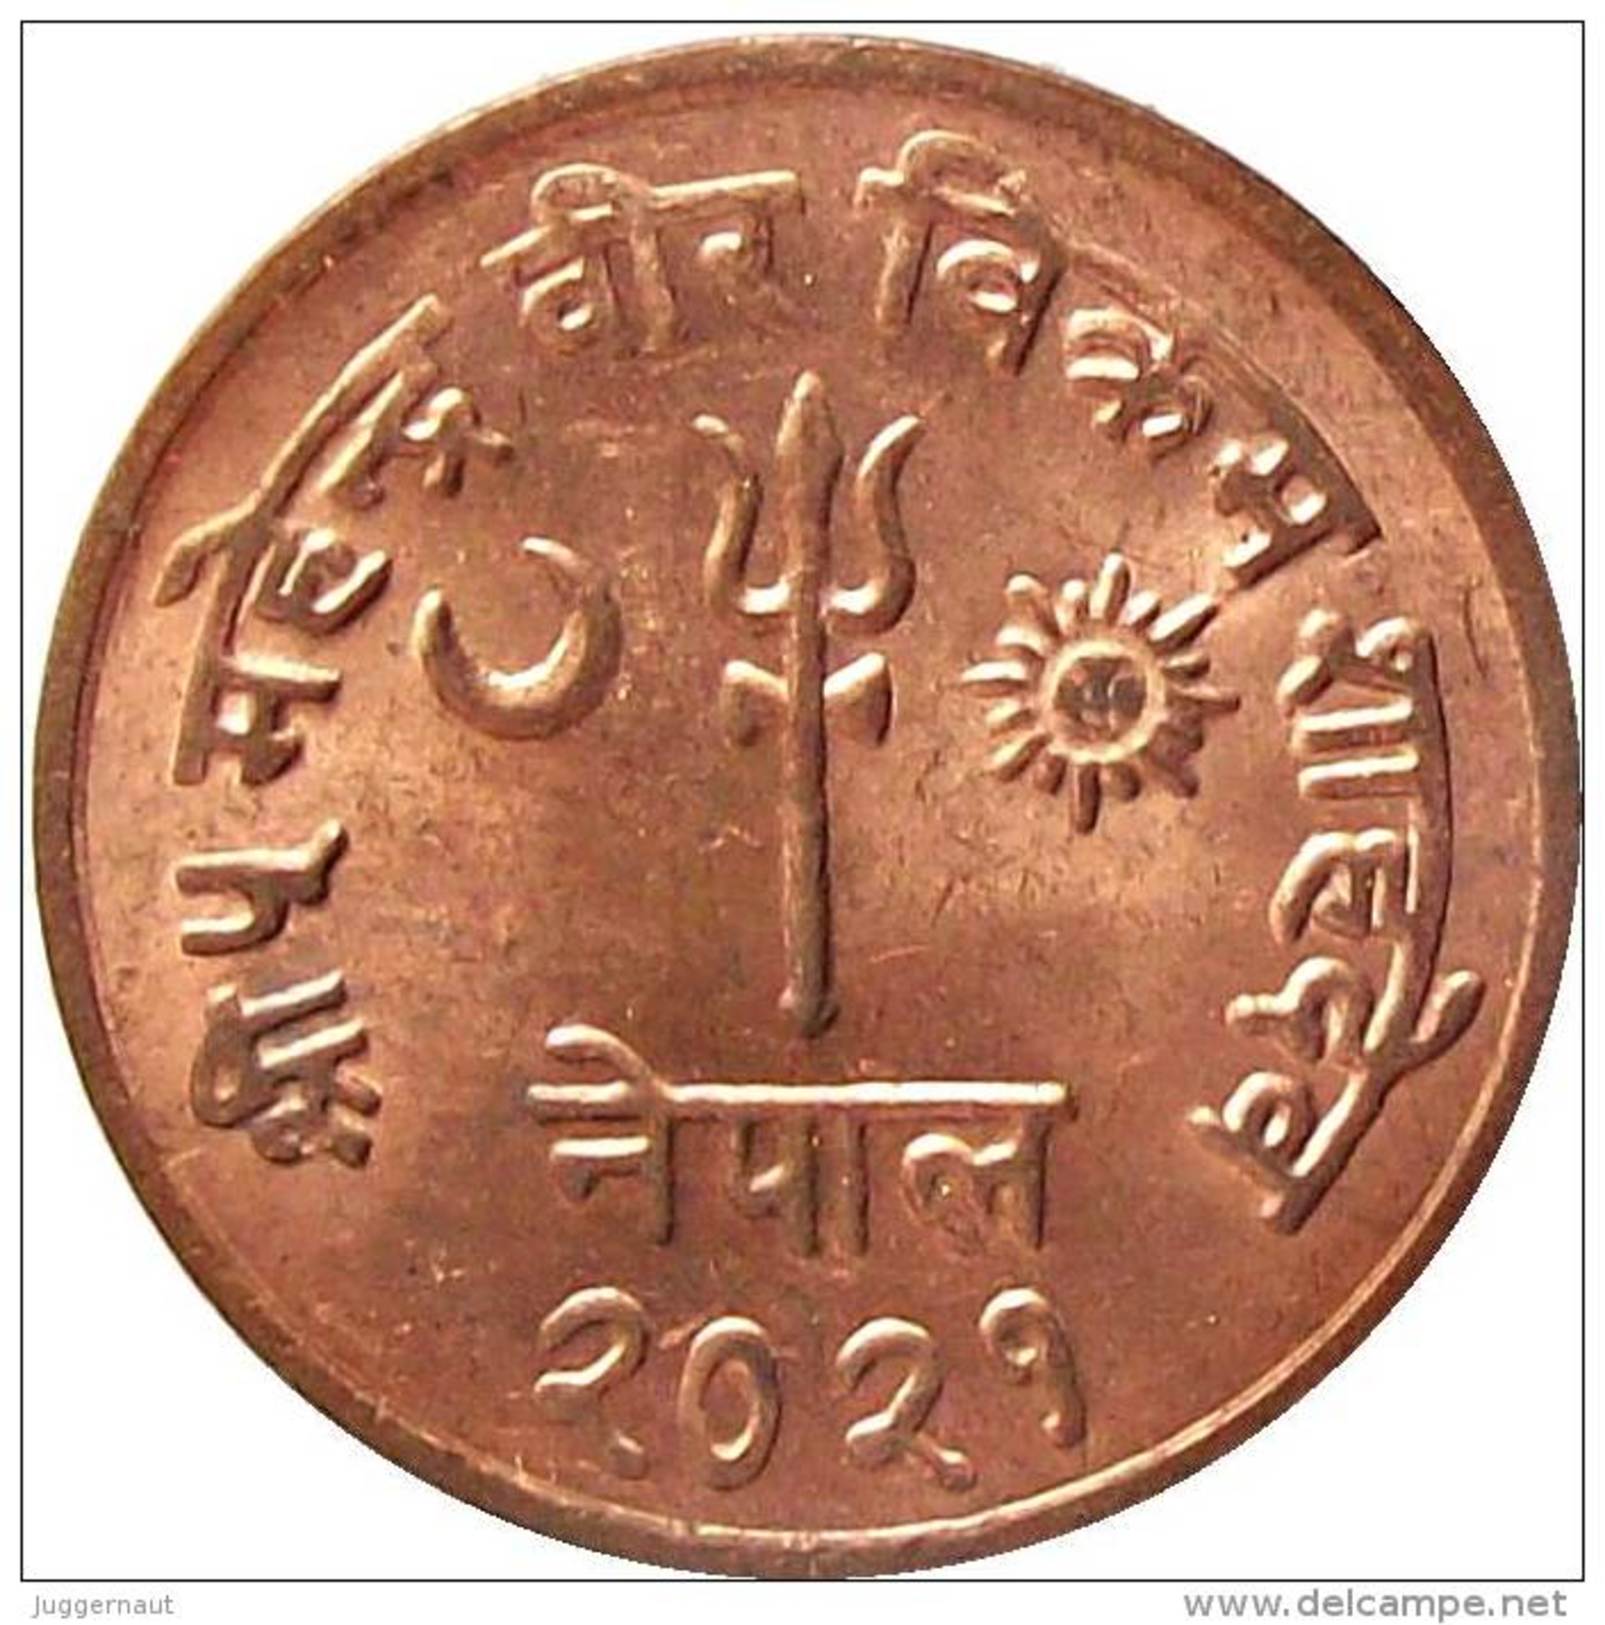 NEPAL 10 PAISA BRONZE COIN 1964 AD KM-764 UNCIRCULATED UNC - Népal